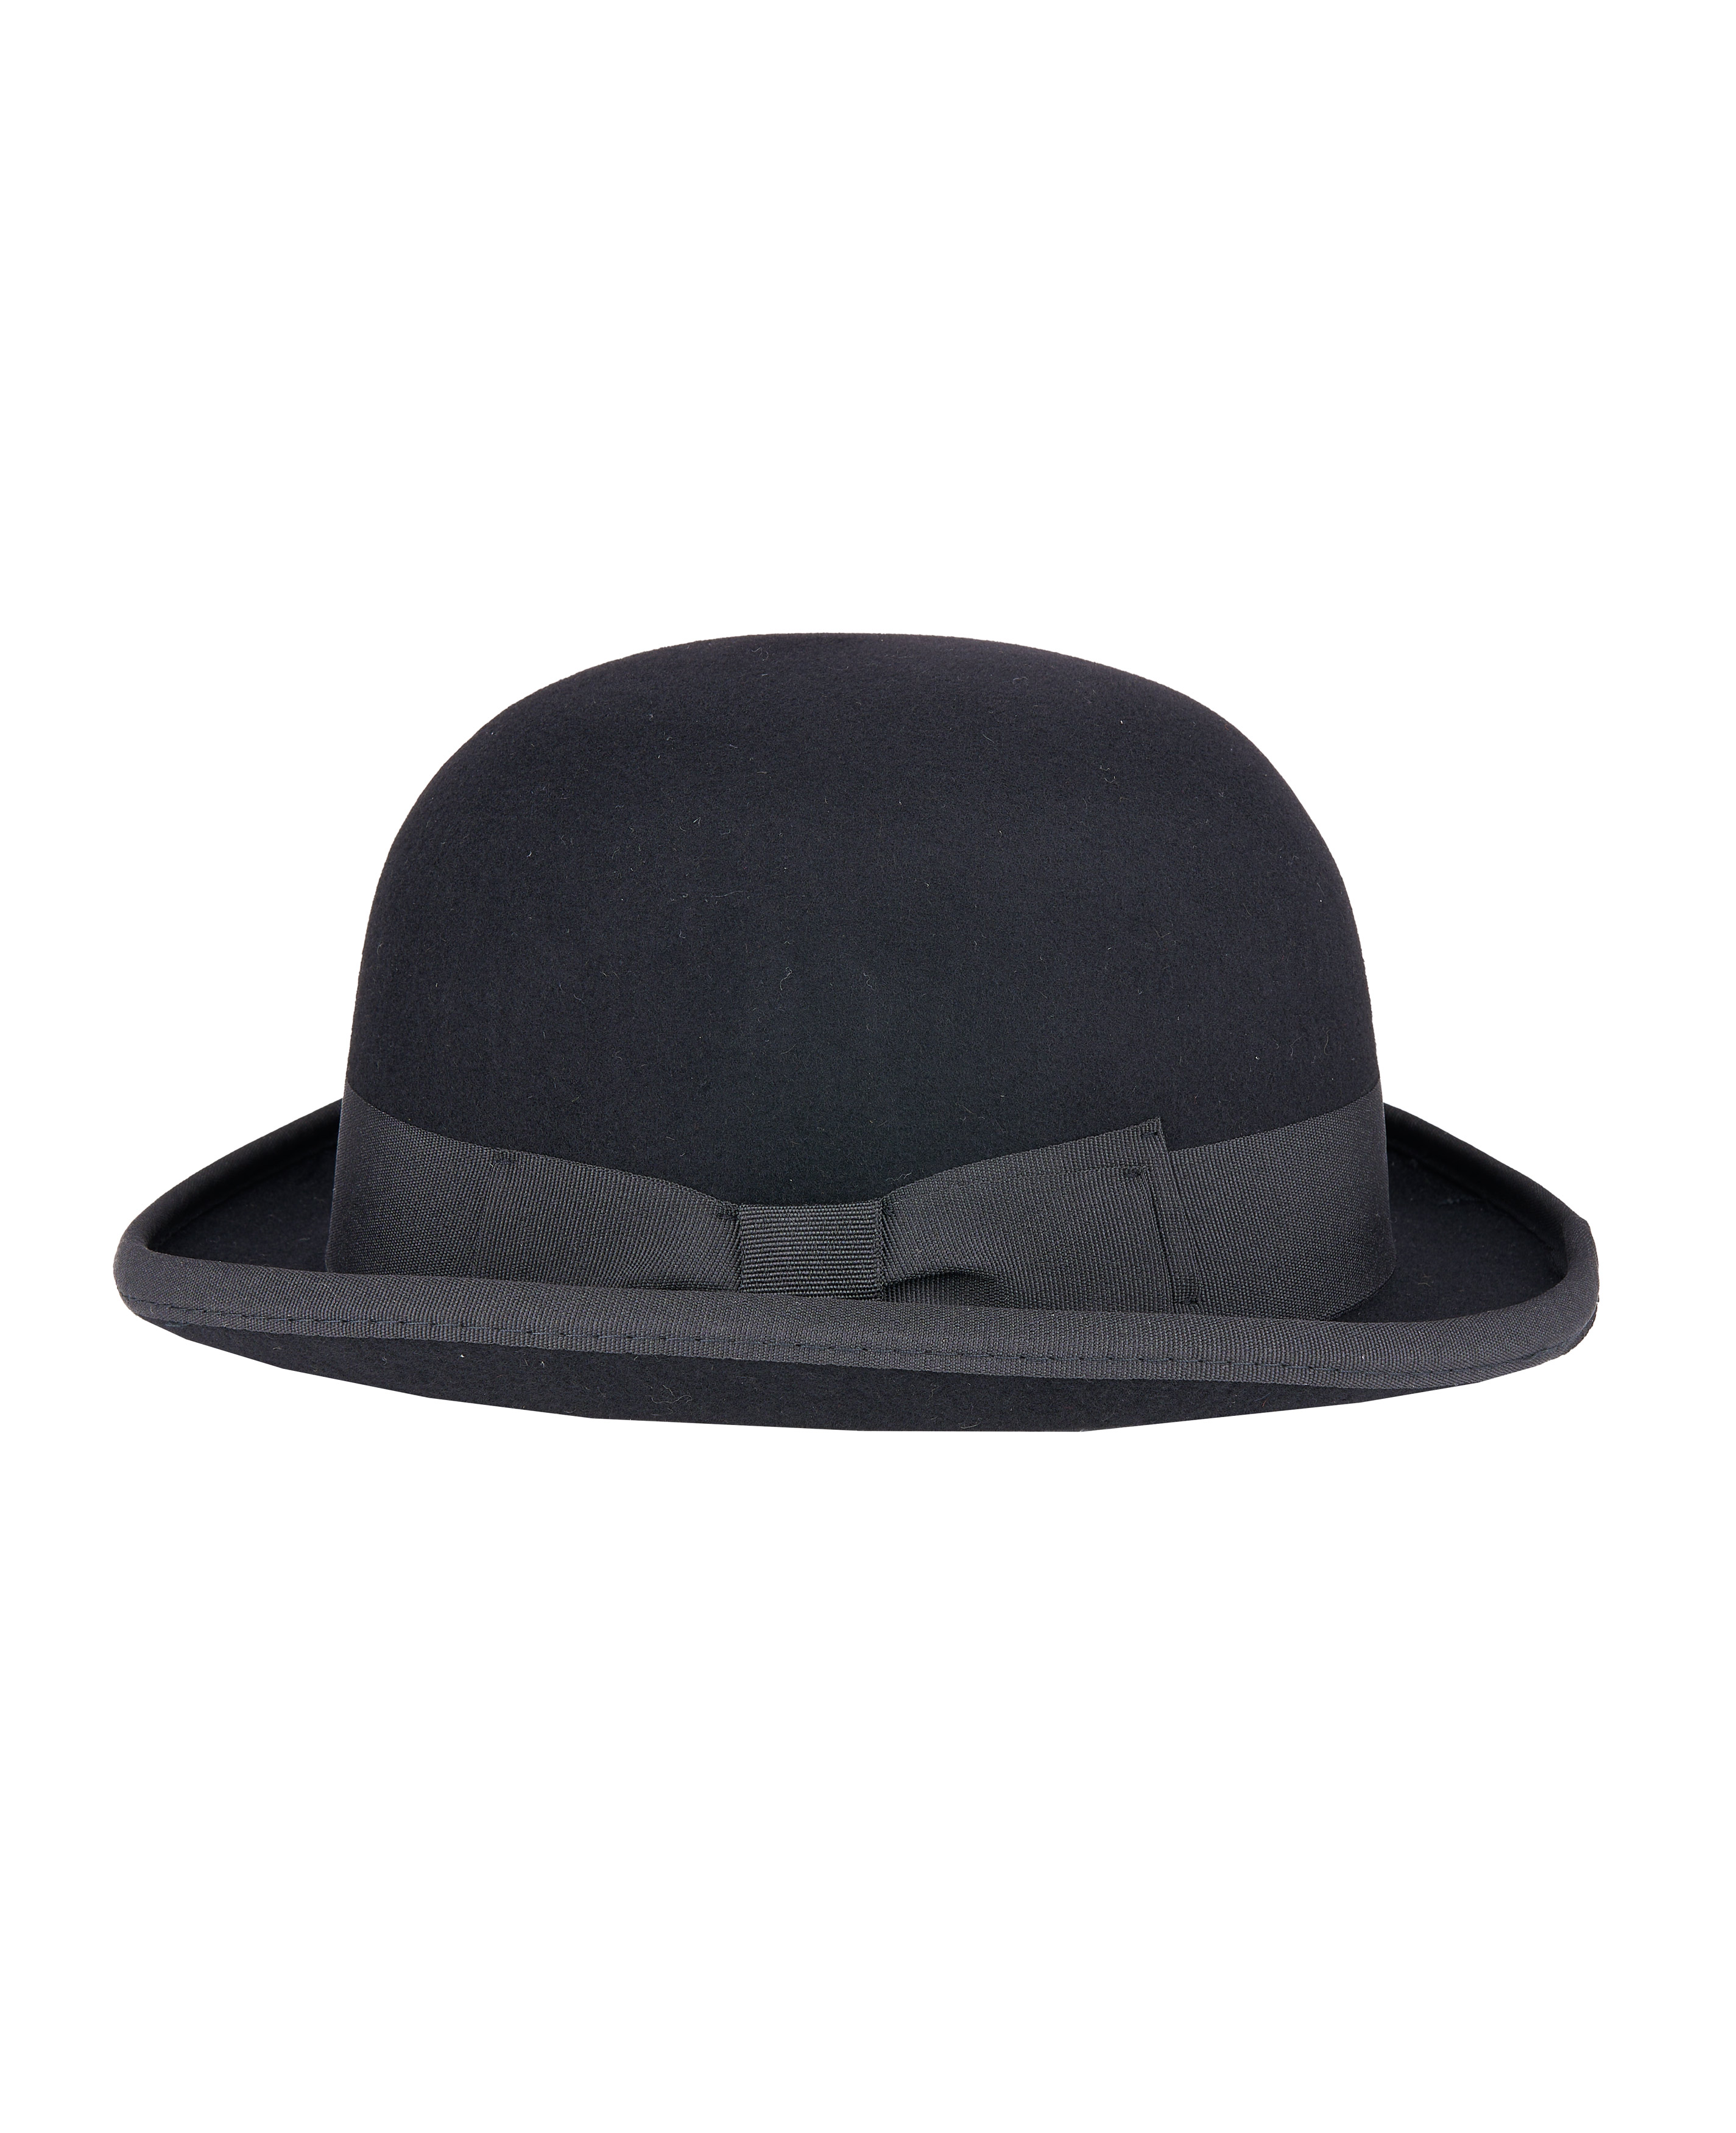 1921 Bowler Hat black